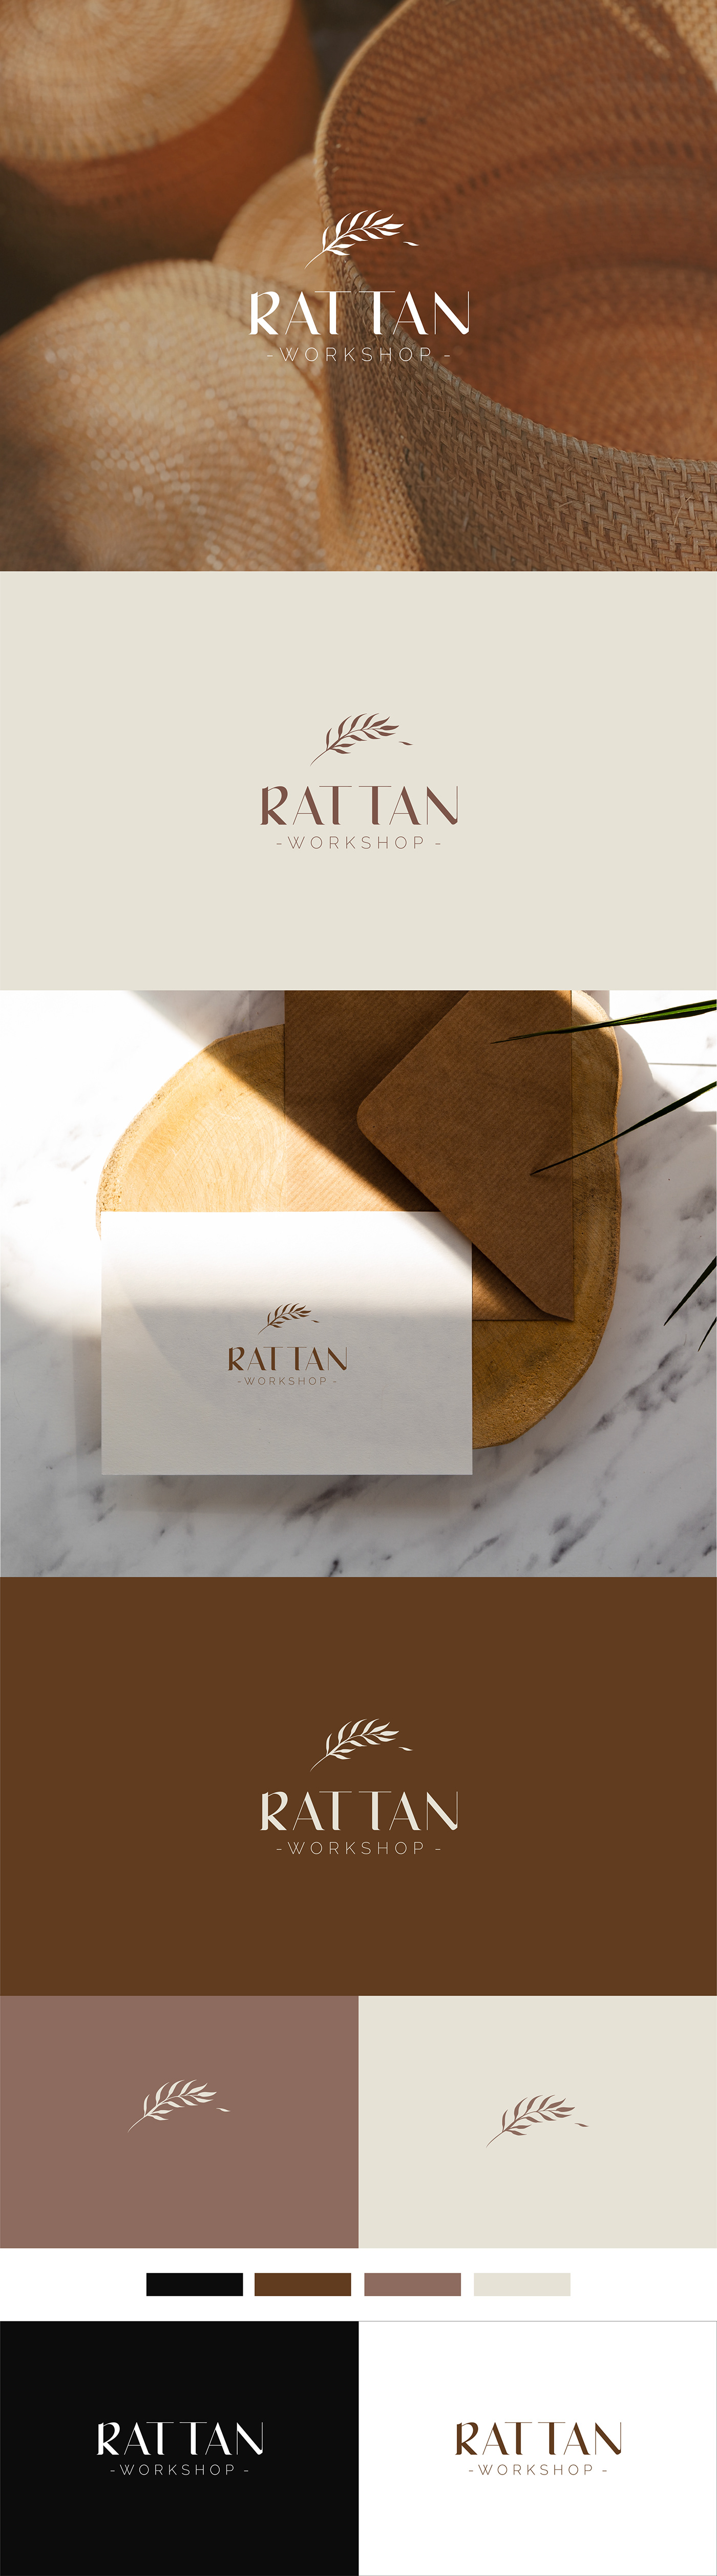 rattan interior design  branding  brand identity Graphic Designer visual identity identity Social media post marketing   Advertising 